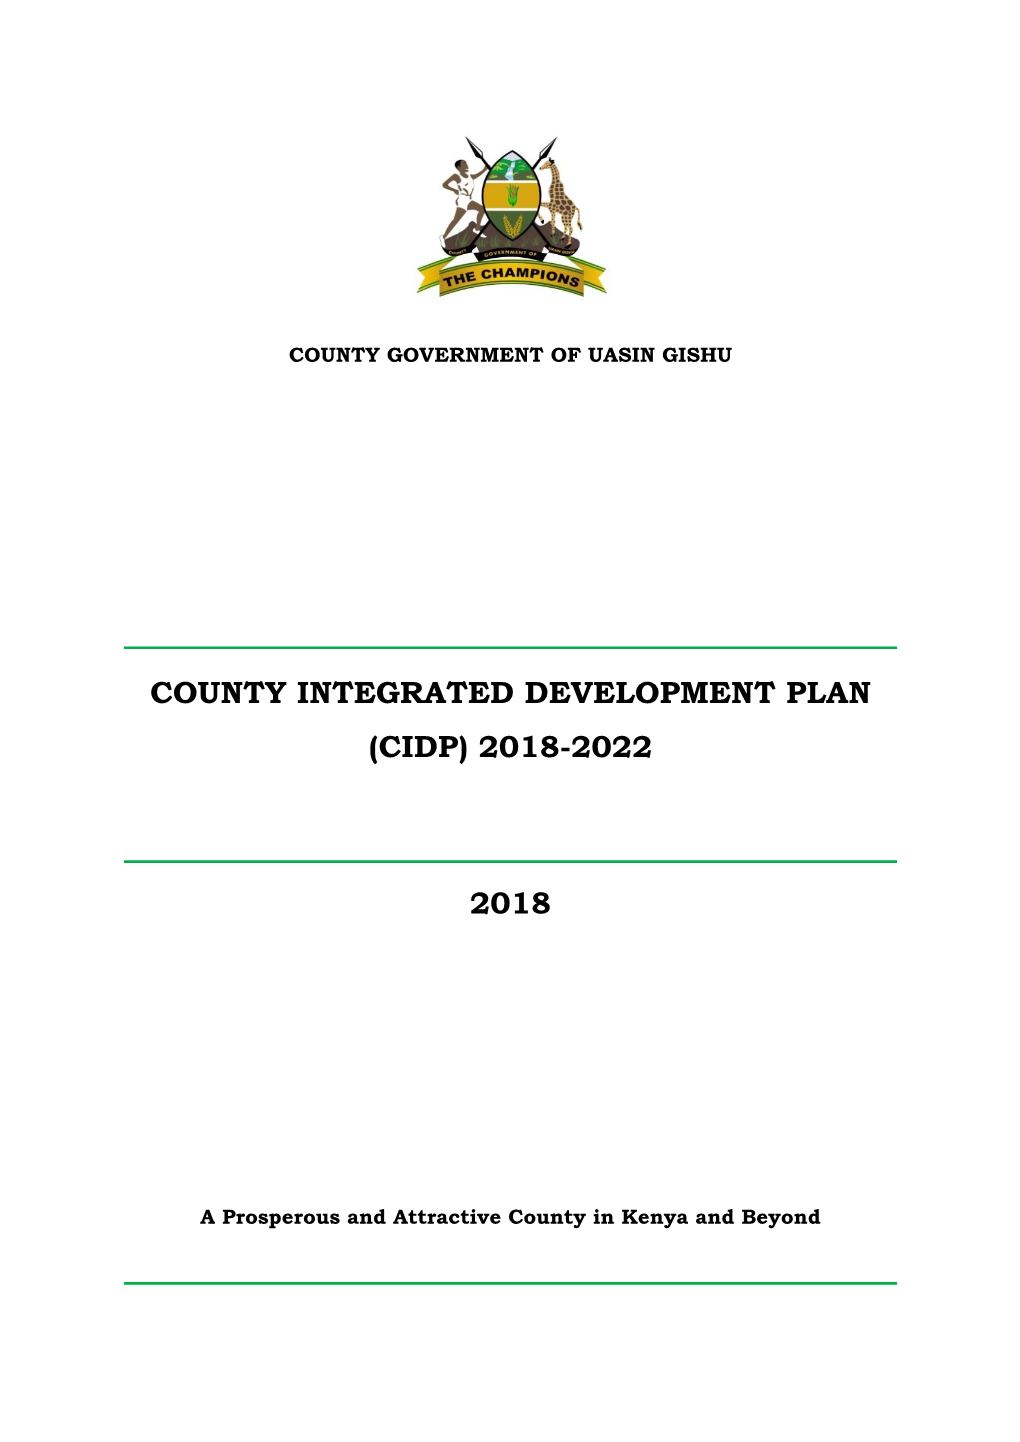 County Integrated Development Plan (Cidp) 2018-2022